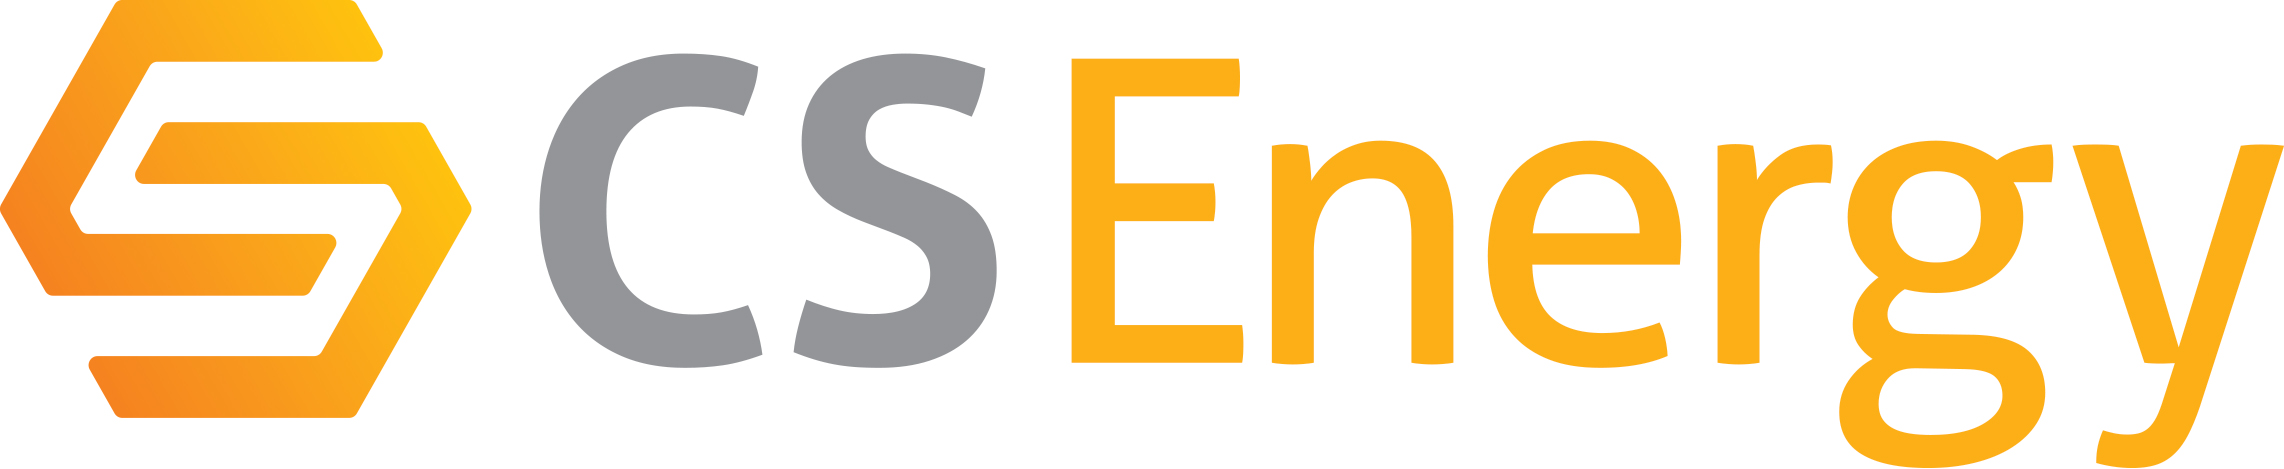 Newly designed logo for CS Energy (formerly Conti Solar)